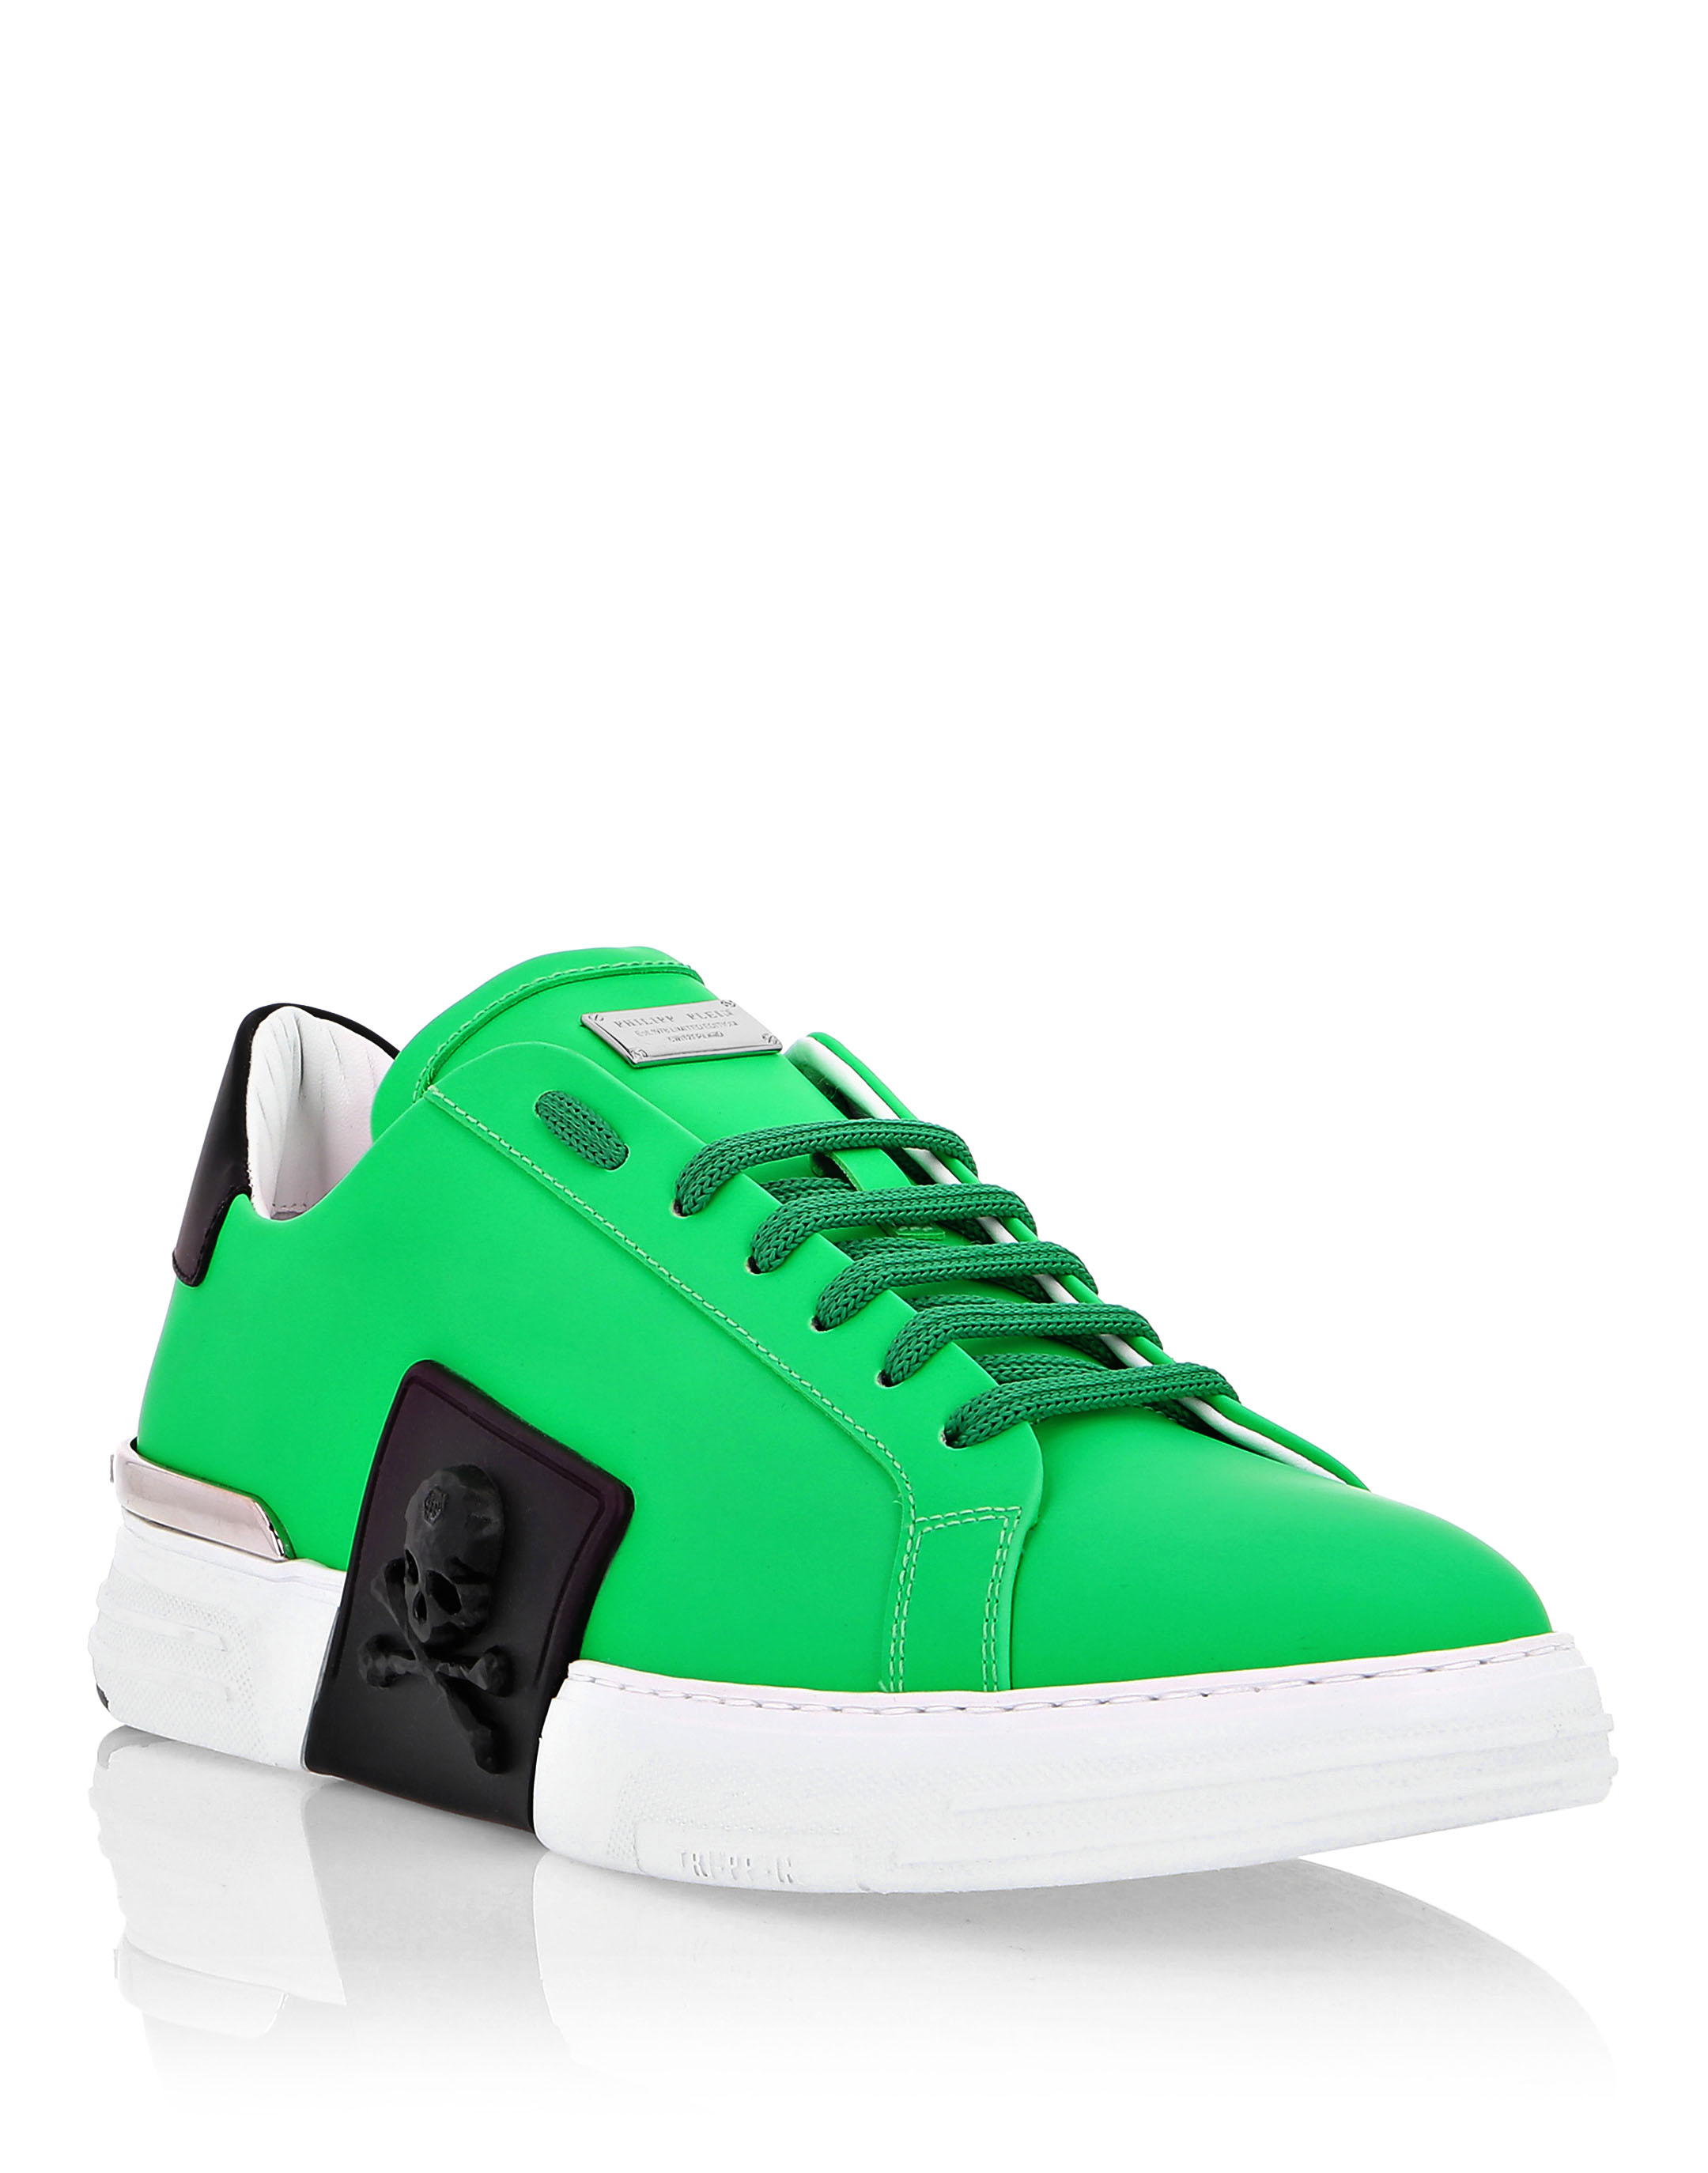 philipp plein green shoes